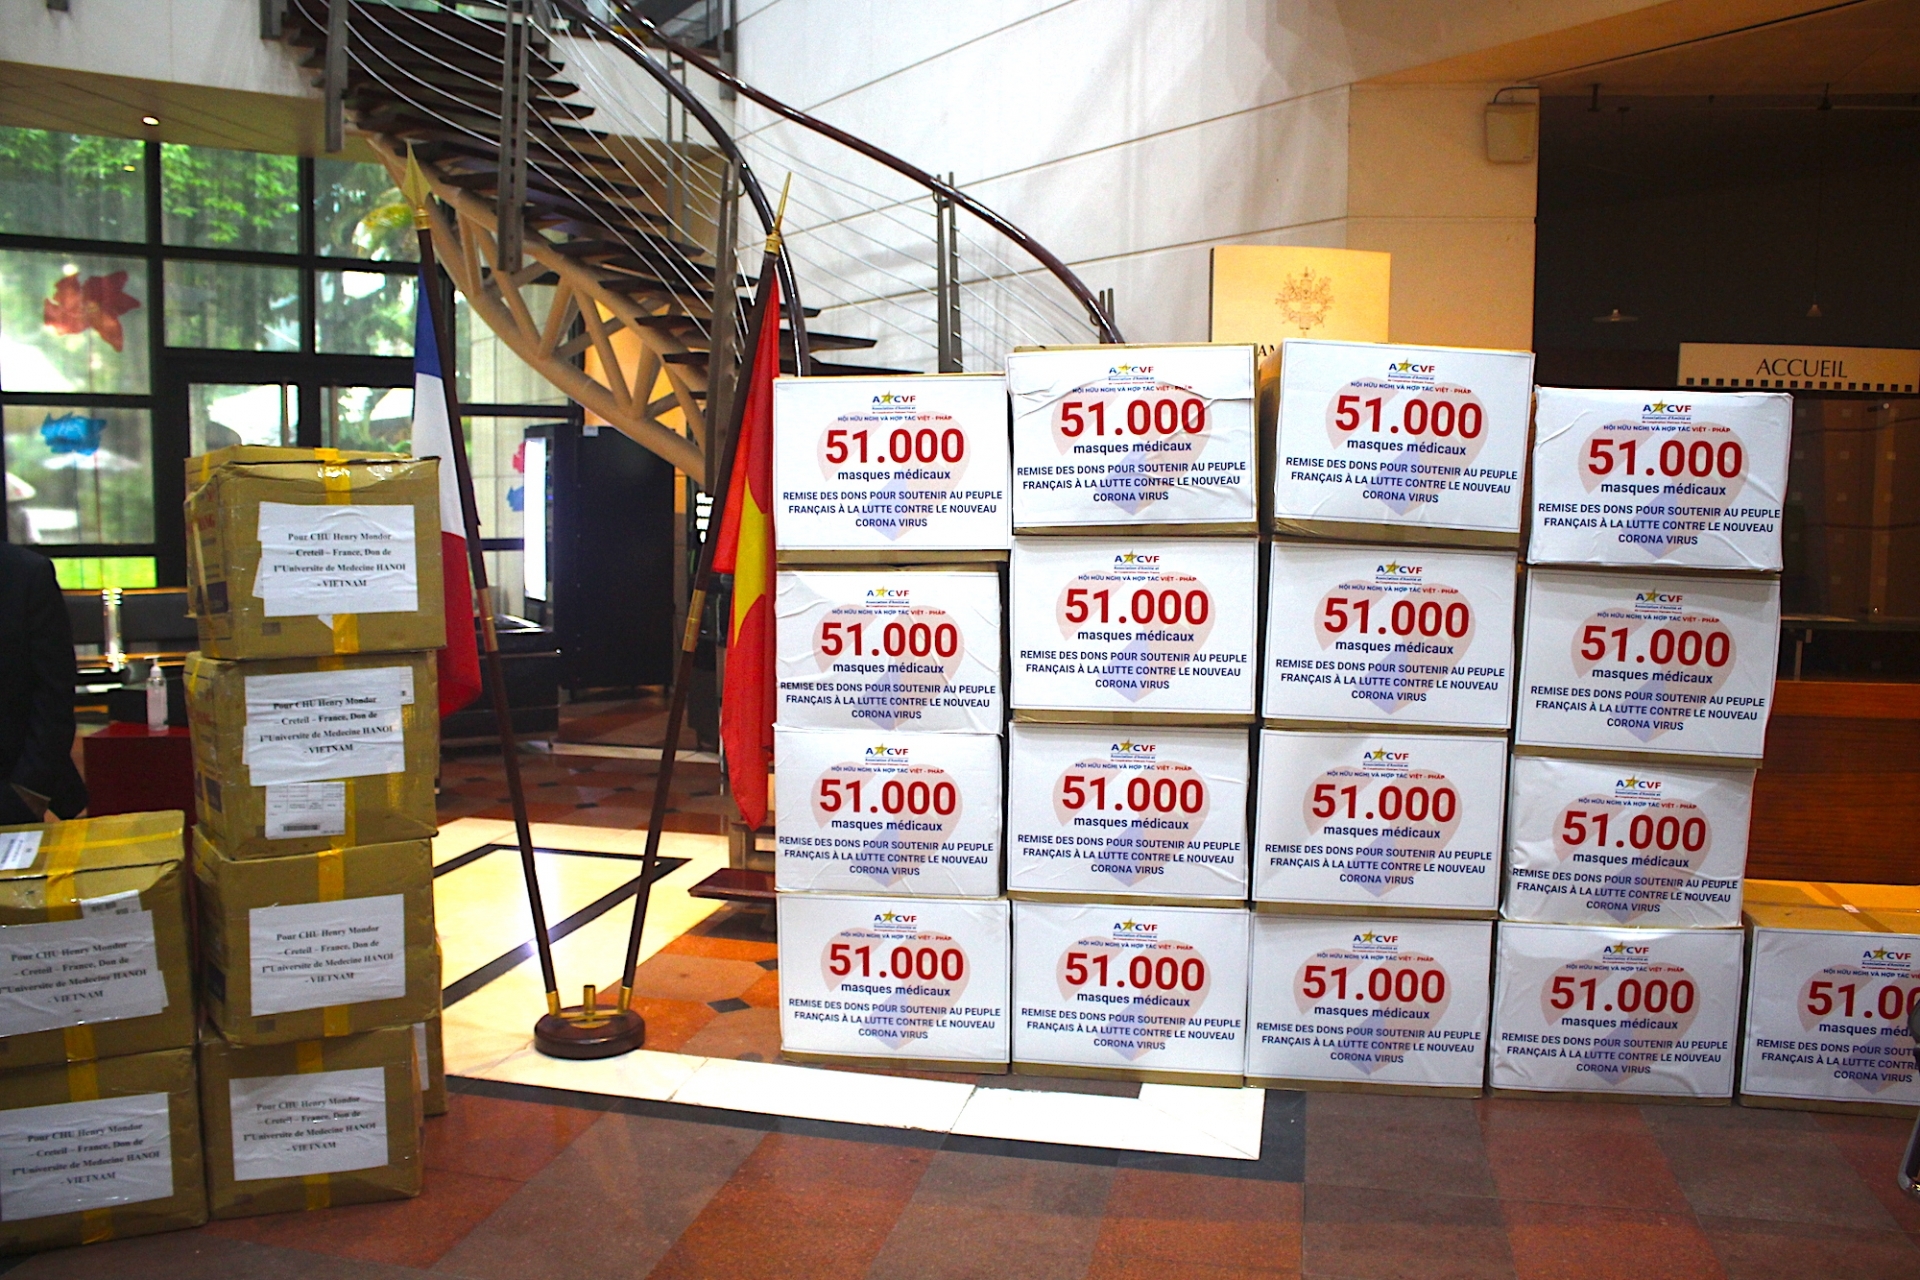 vietnam france friendship association donates 51000 masks to france